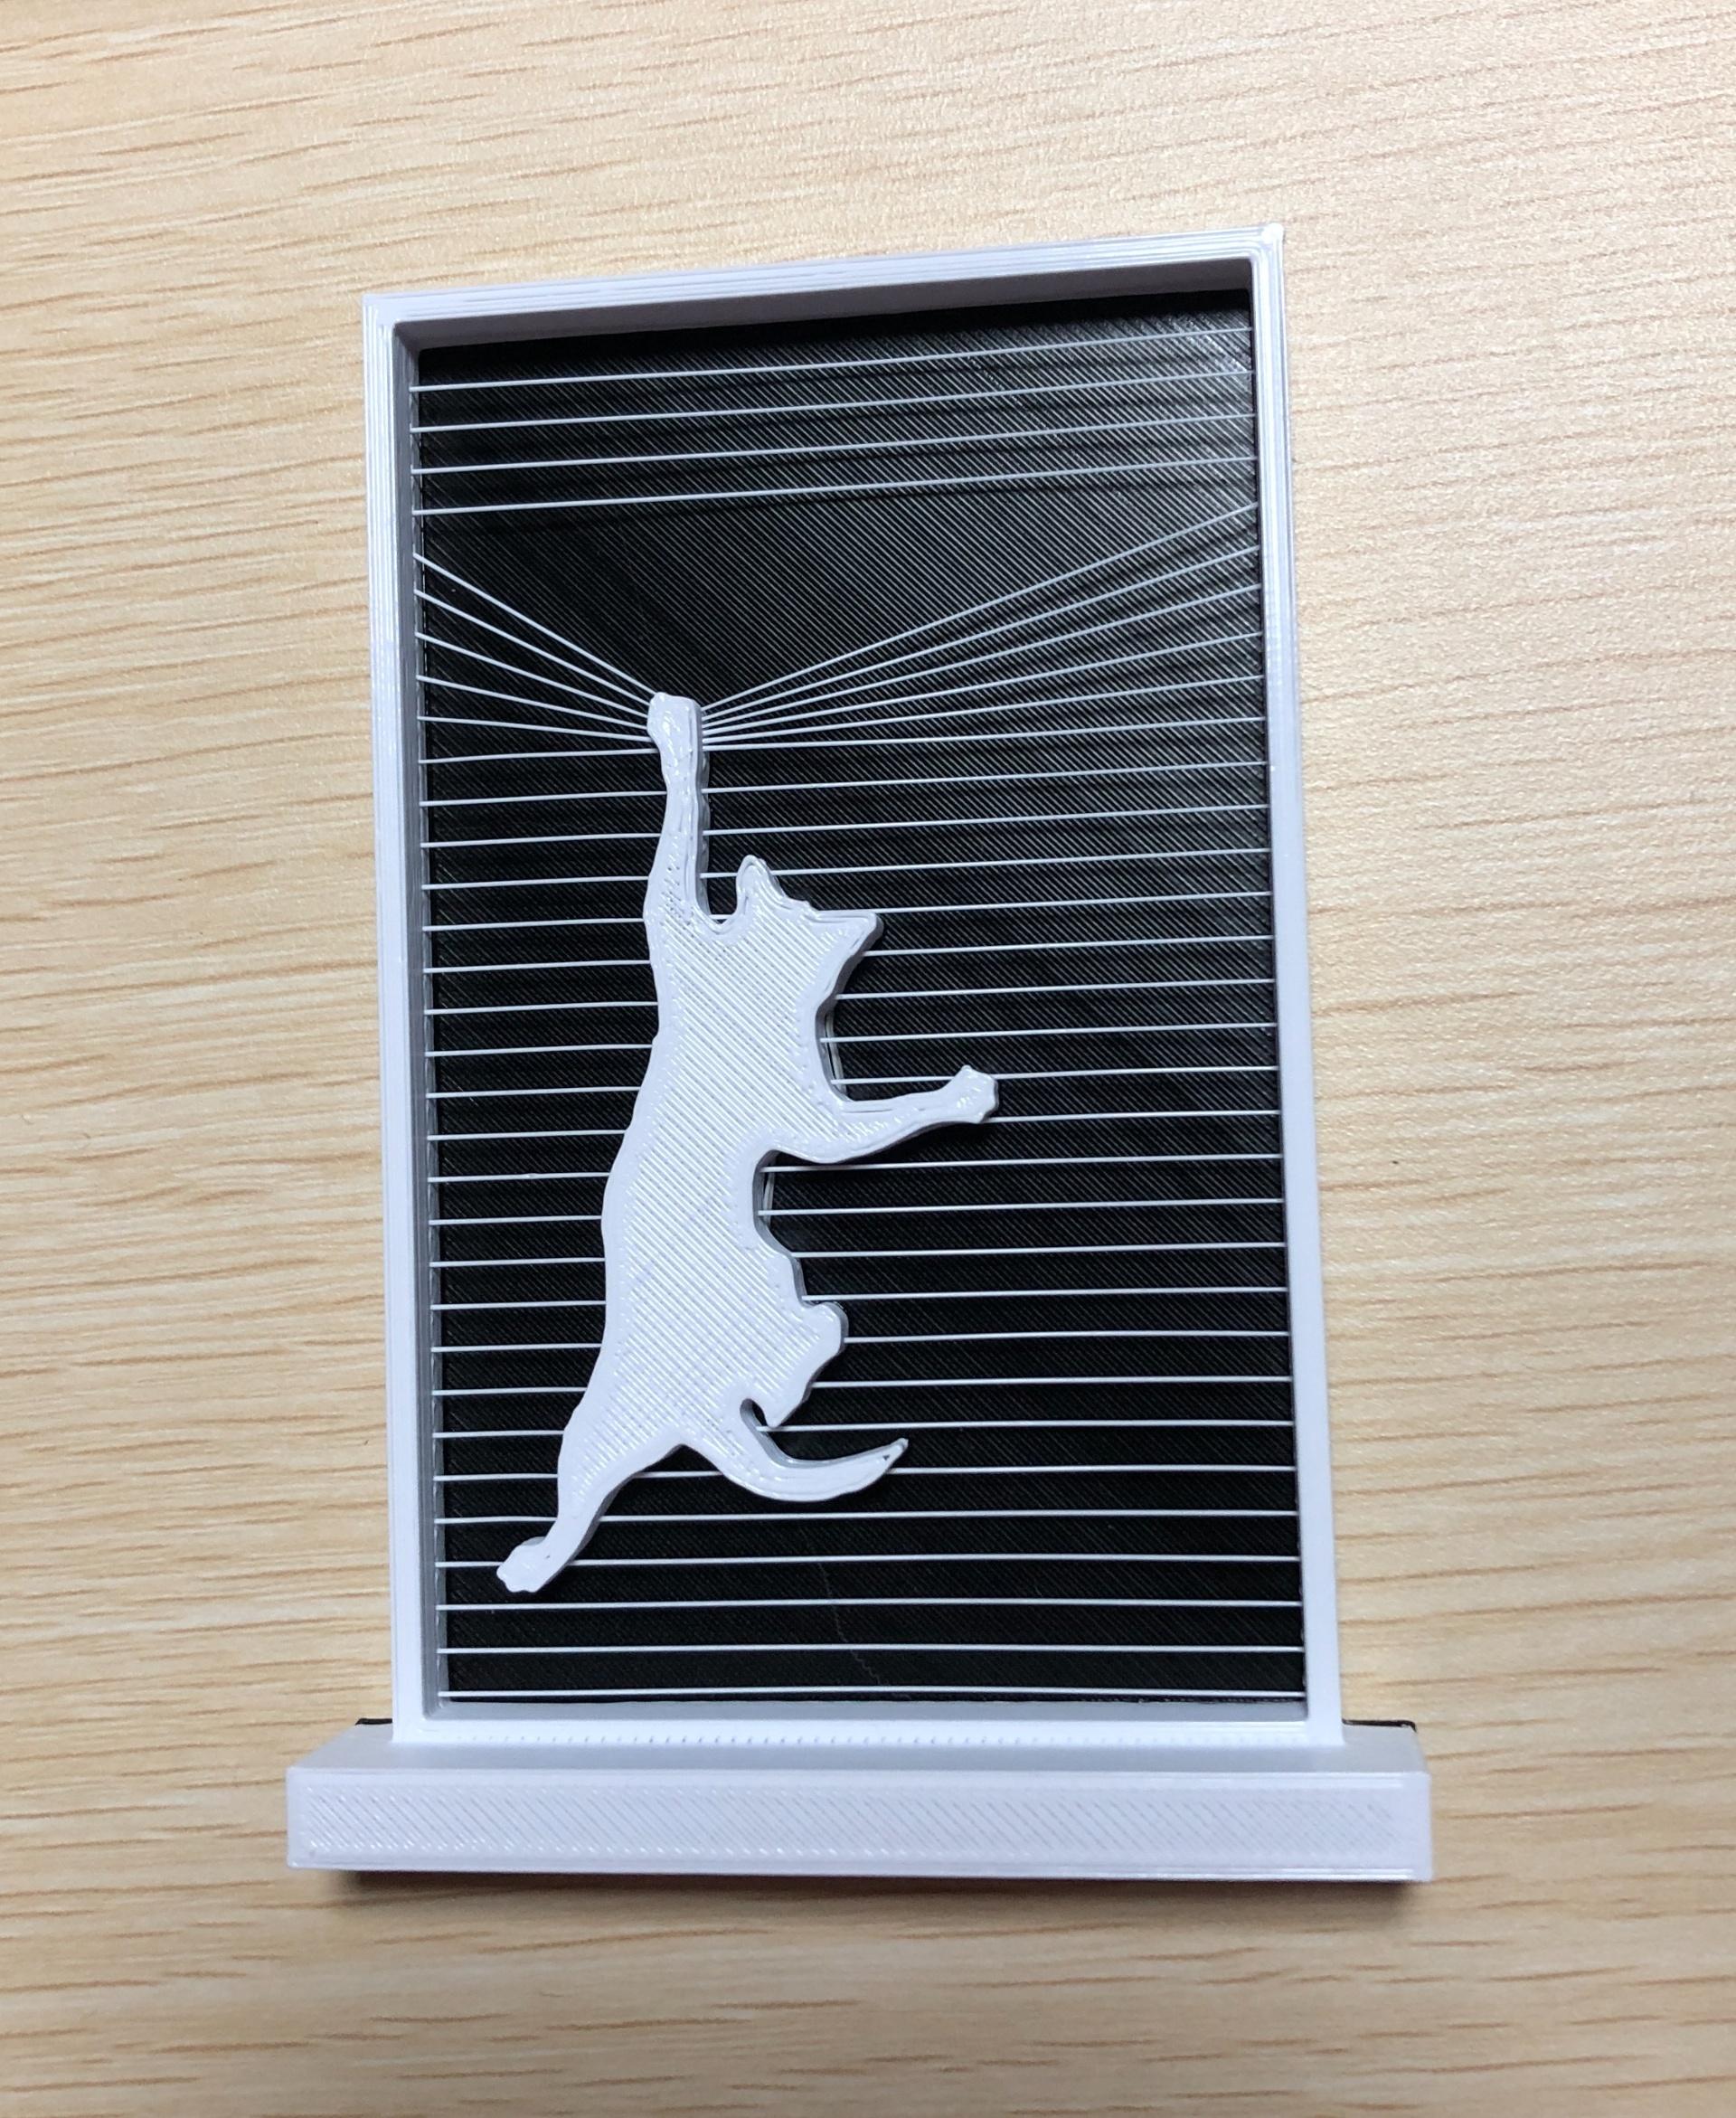 Hanging Cat Ornament - E3P using Cura slicer
sitting on dark background (same print) - 3d model